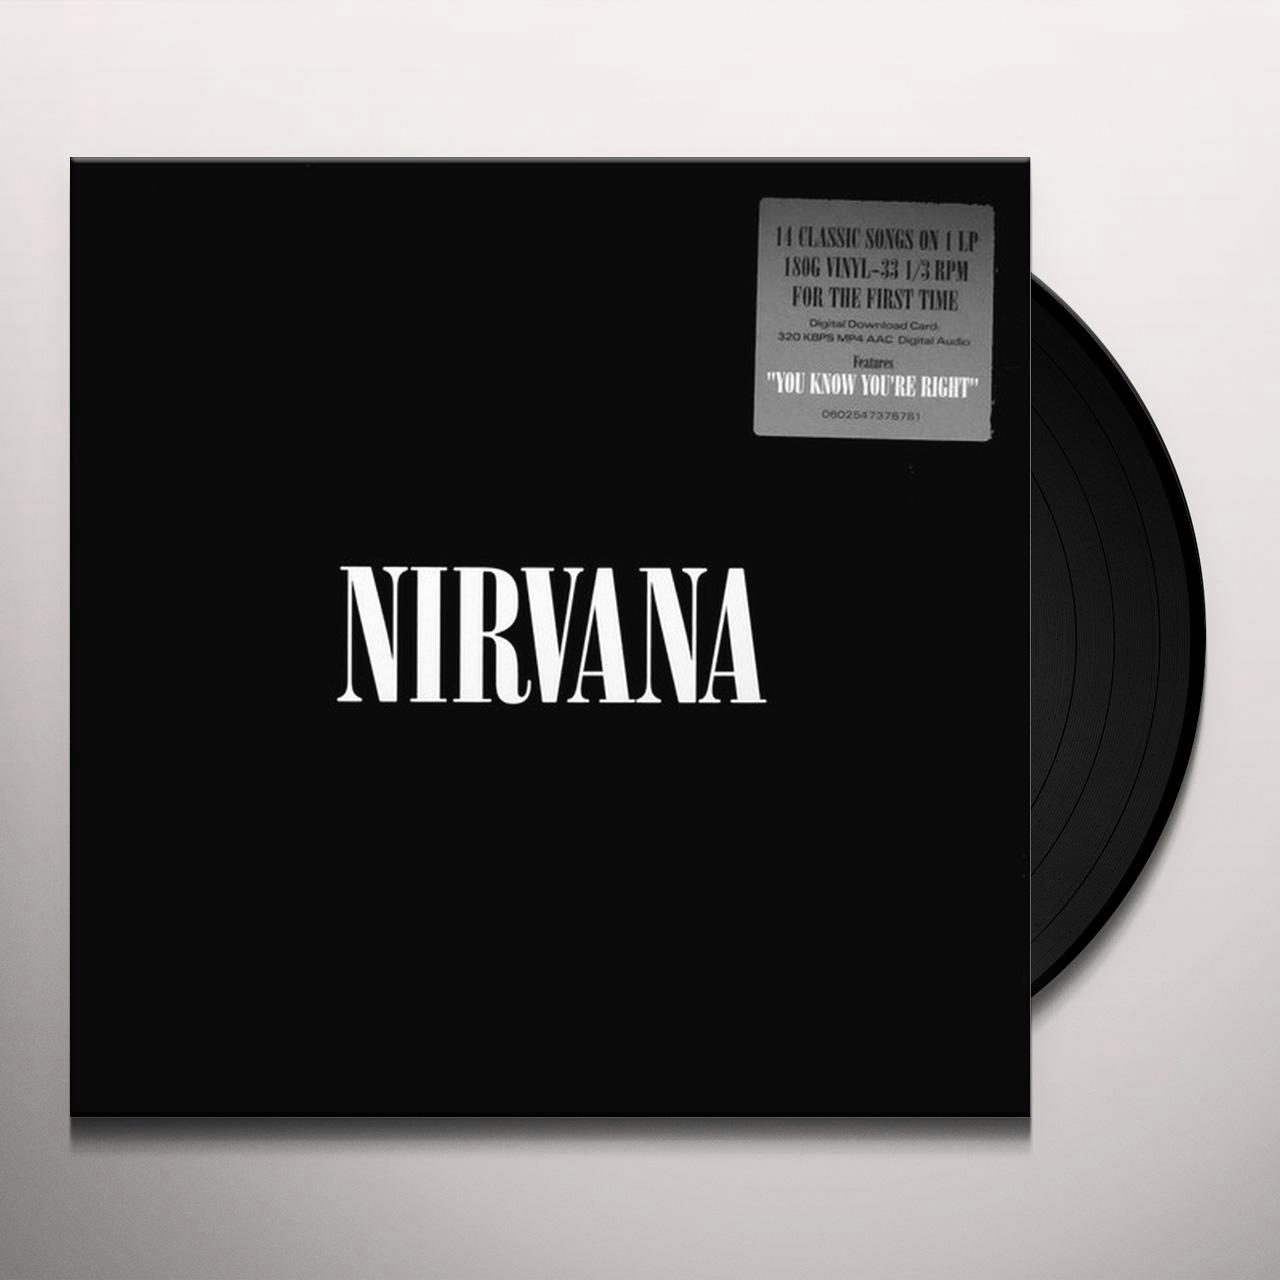 Vinyl Record - Nirvana